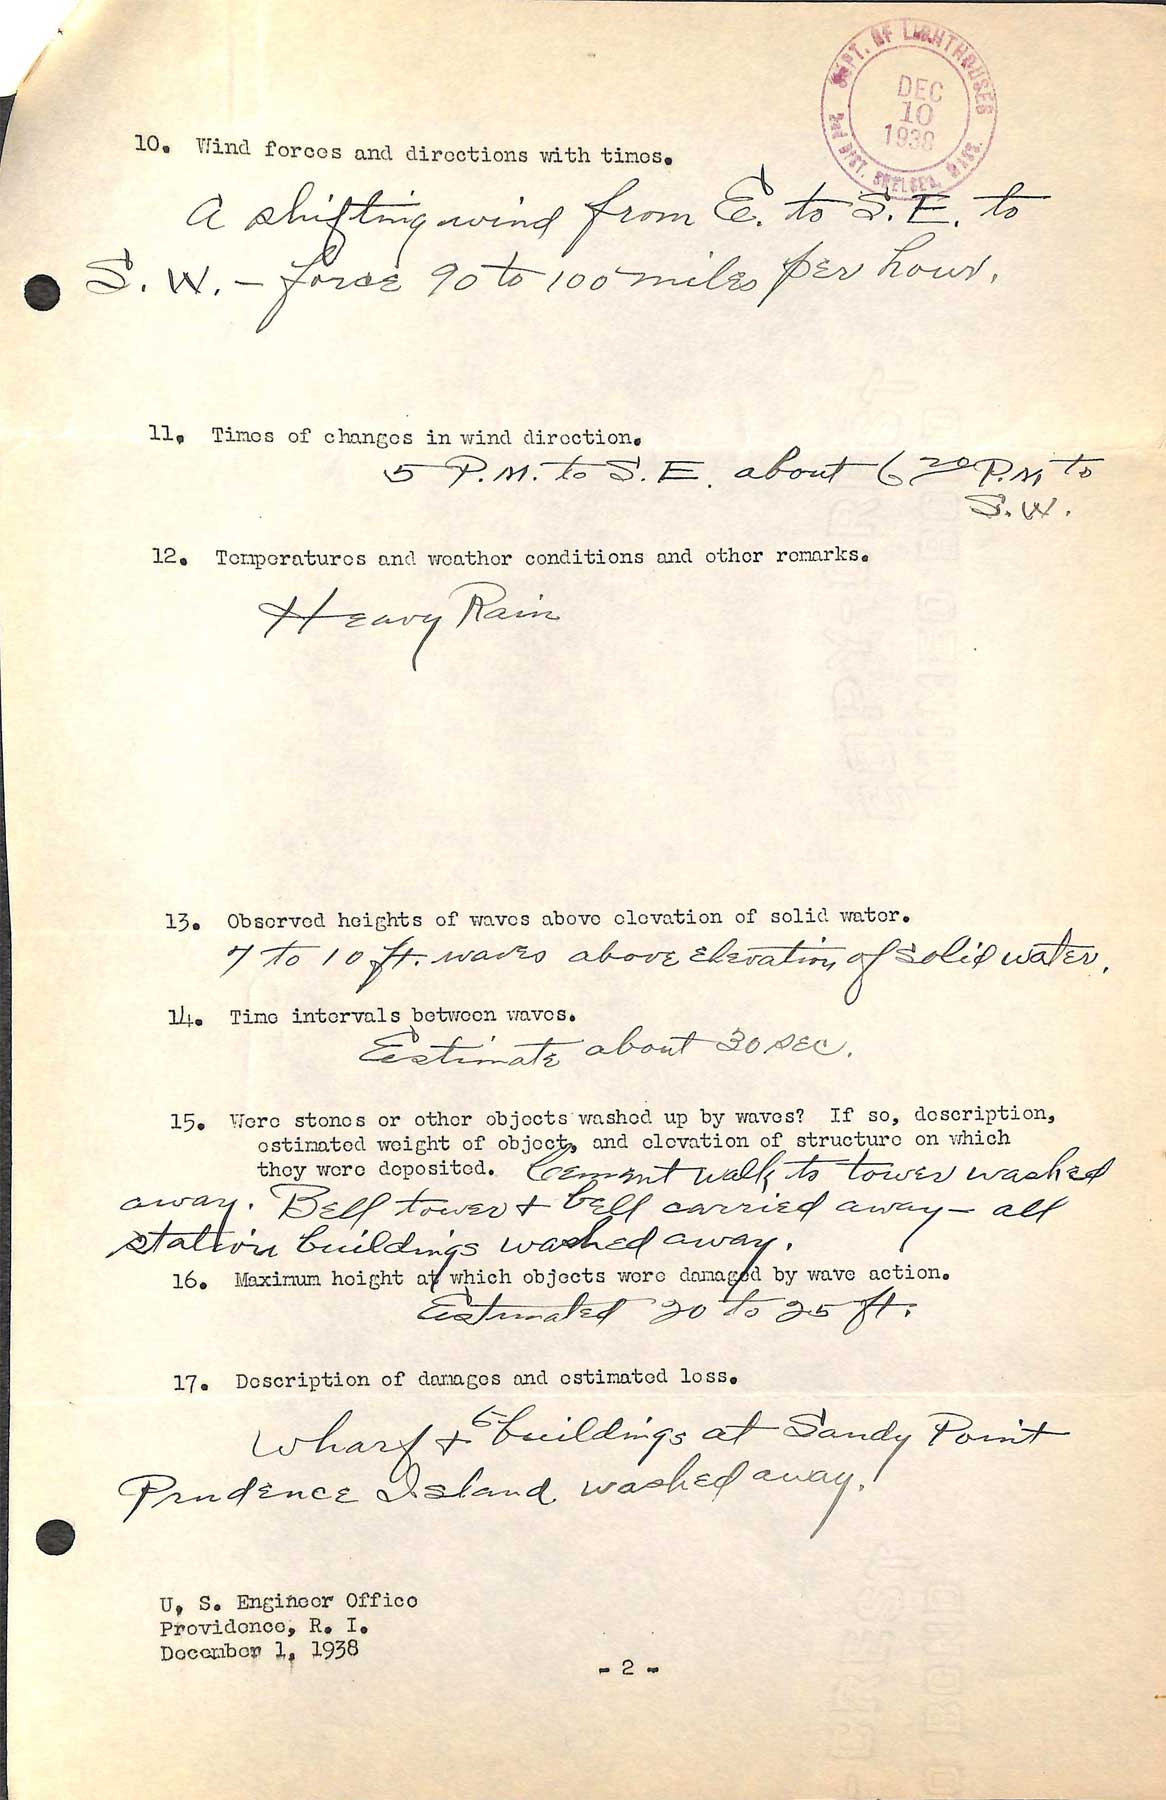 Prudence Island Light - A questionnaire regarding the hurricane of September 21, 1938